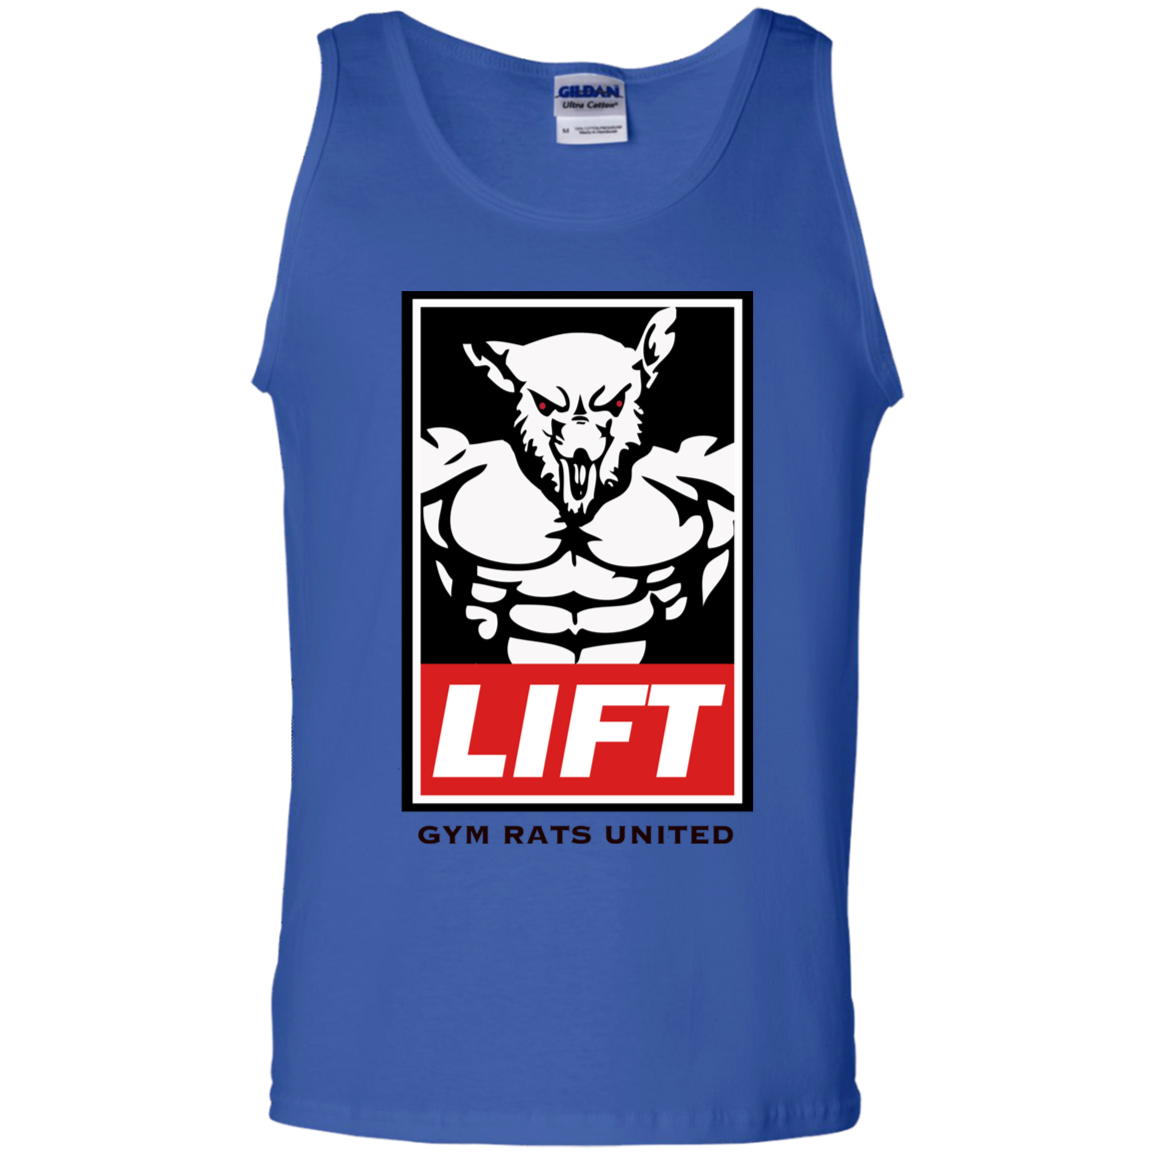 Gym Rats United LIFT Tank Top